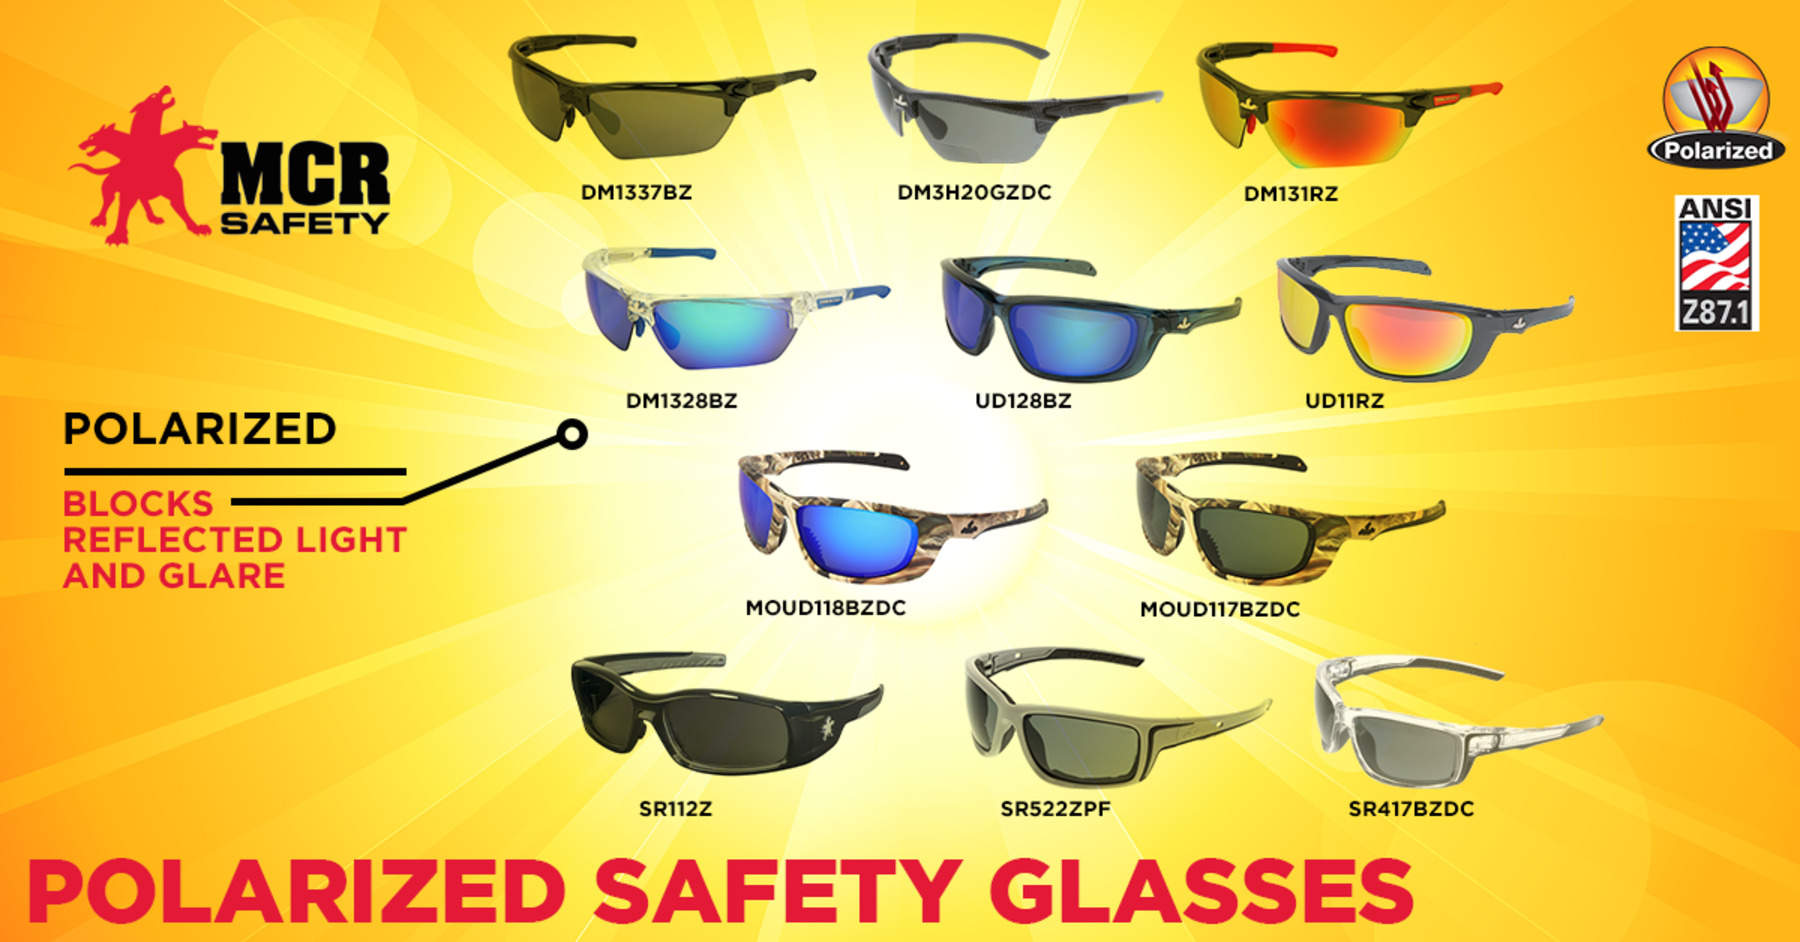 MCR Safety Sunglasses Polarized Dominator™ 3 DM1337BZ